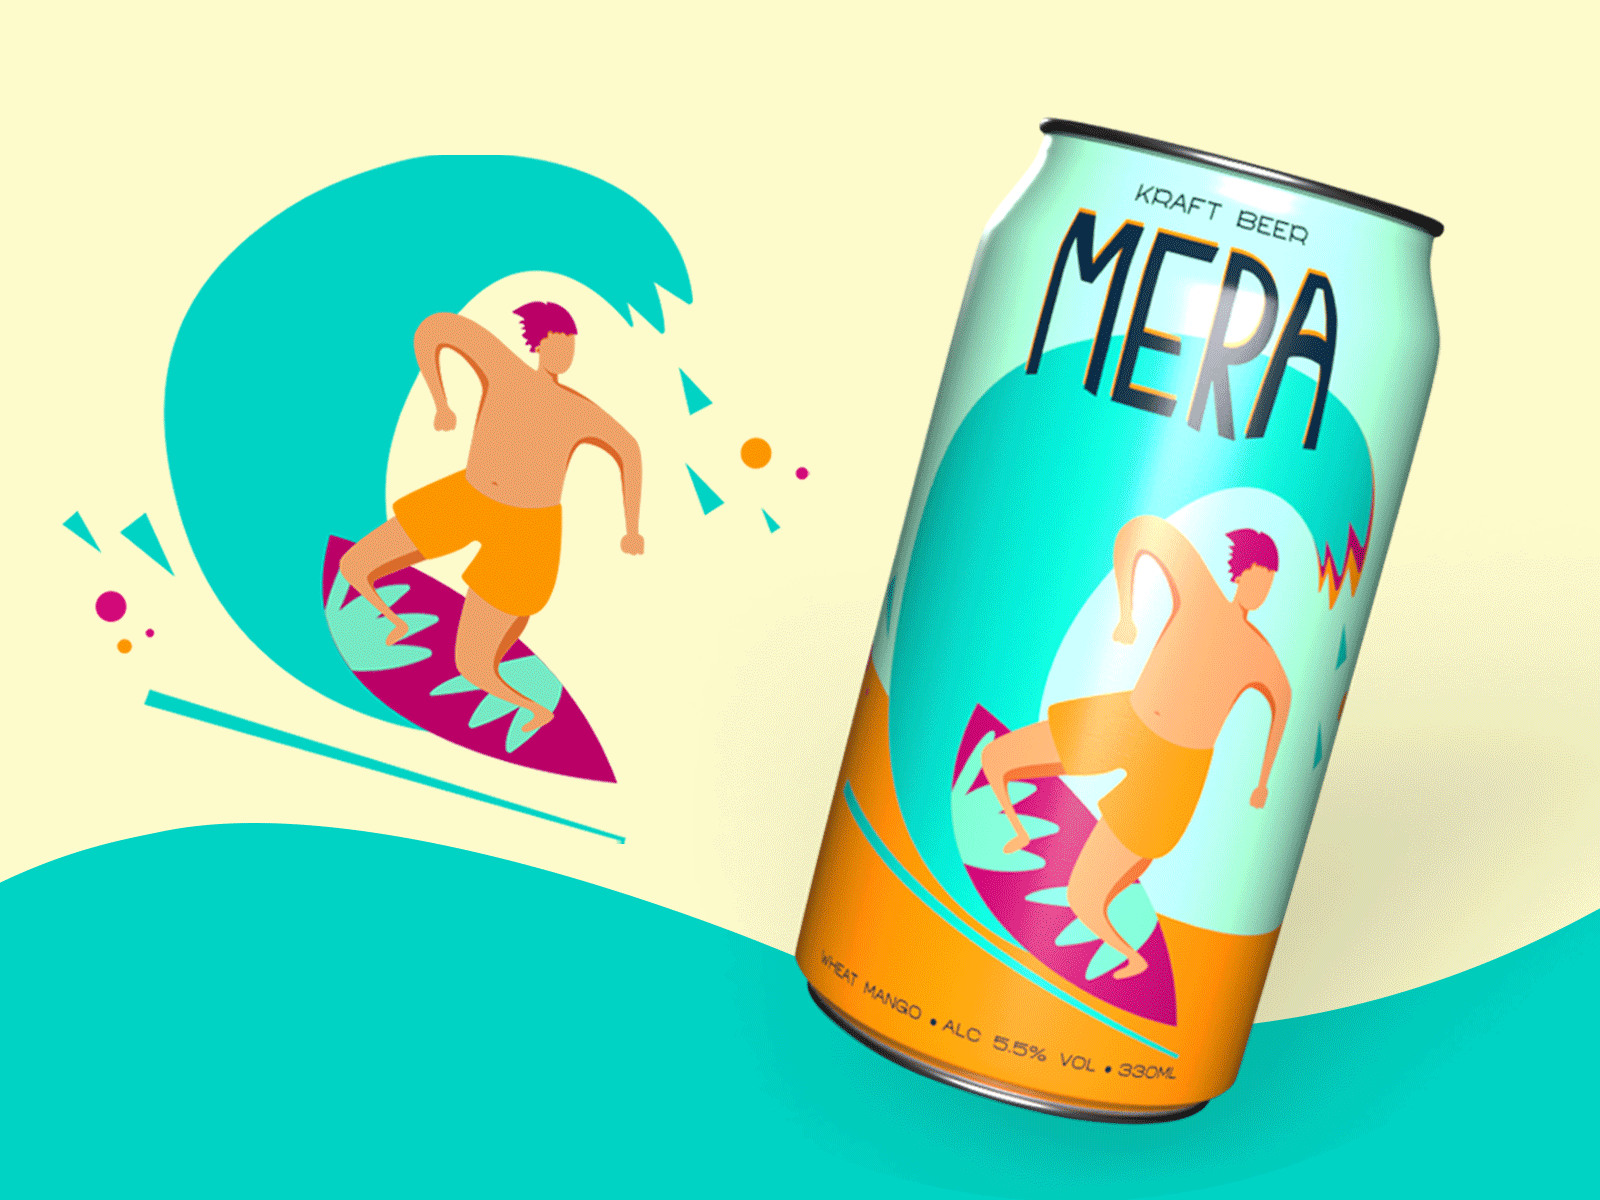 Beer packing design | Craft beer MERA | Summer vibe